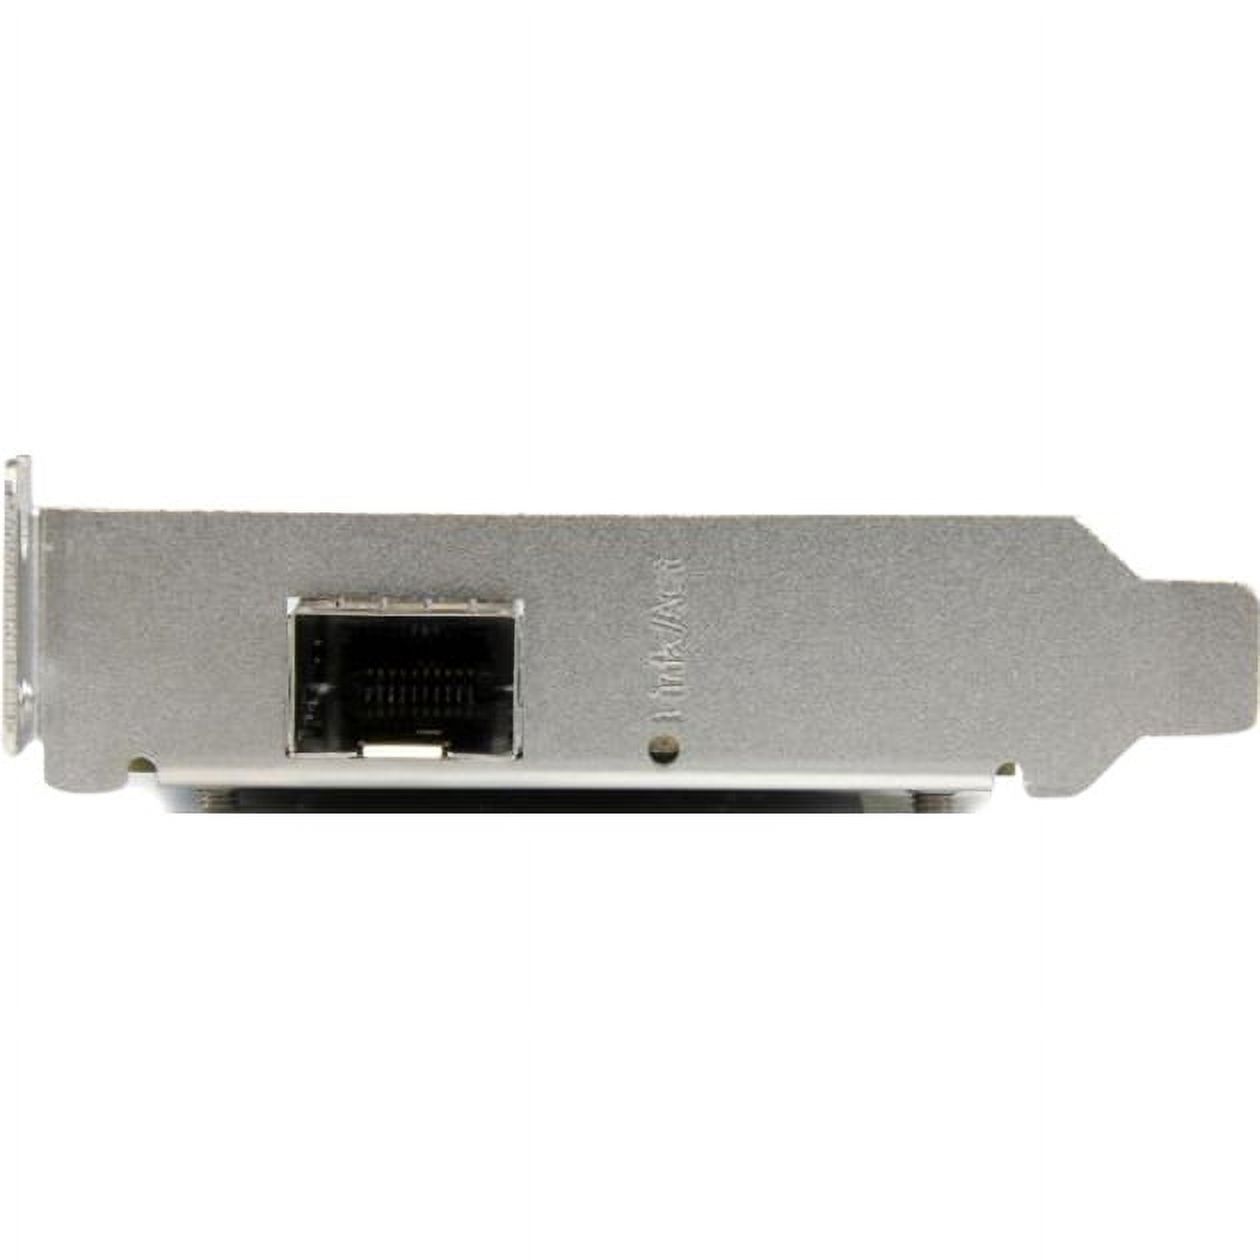 PCI Express 10 Gigabit Ethernet Fiber Network Card w/ Open  SFP+, PCIe x4 10Gb NIC SFP+ Adapter